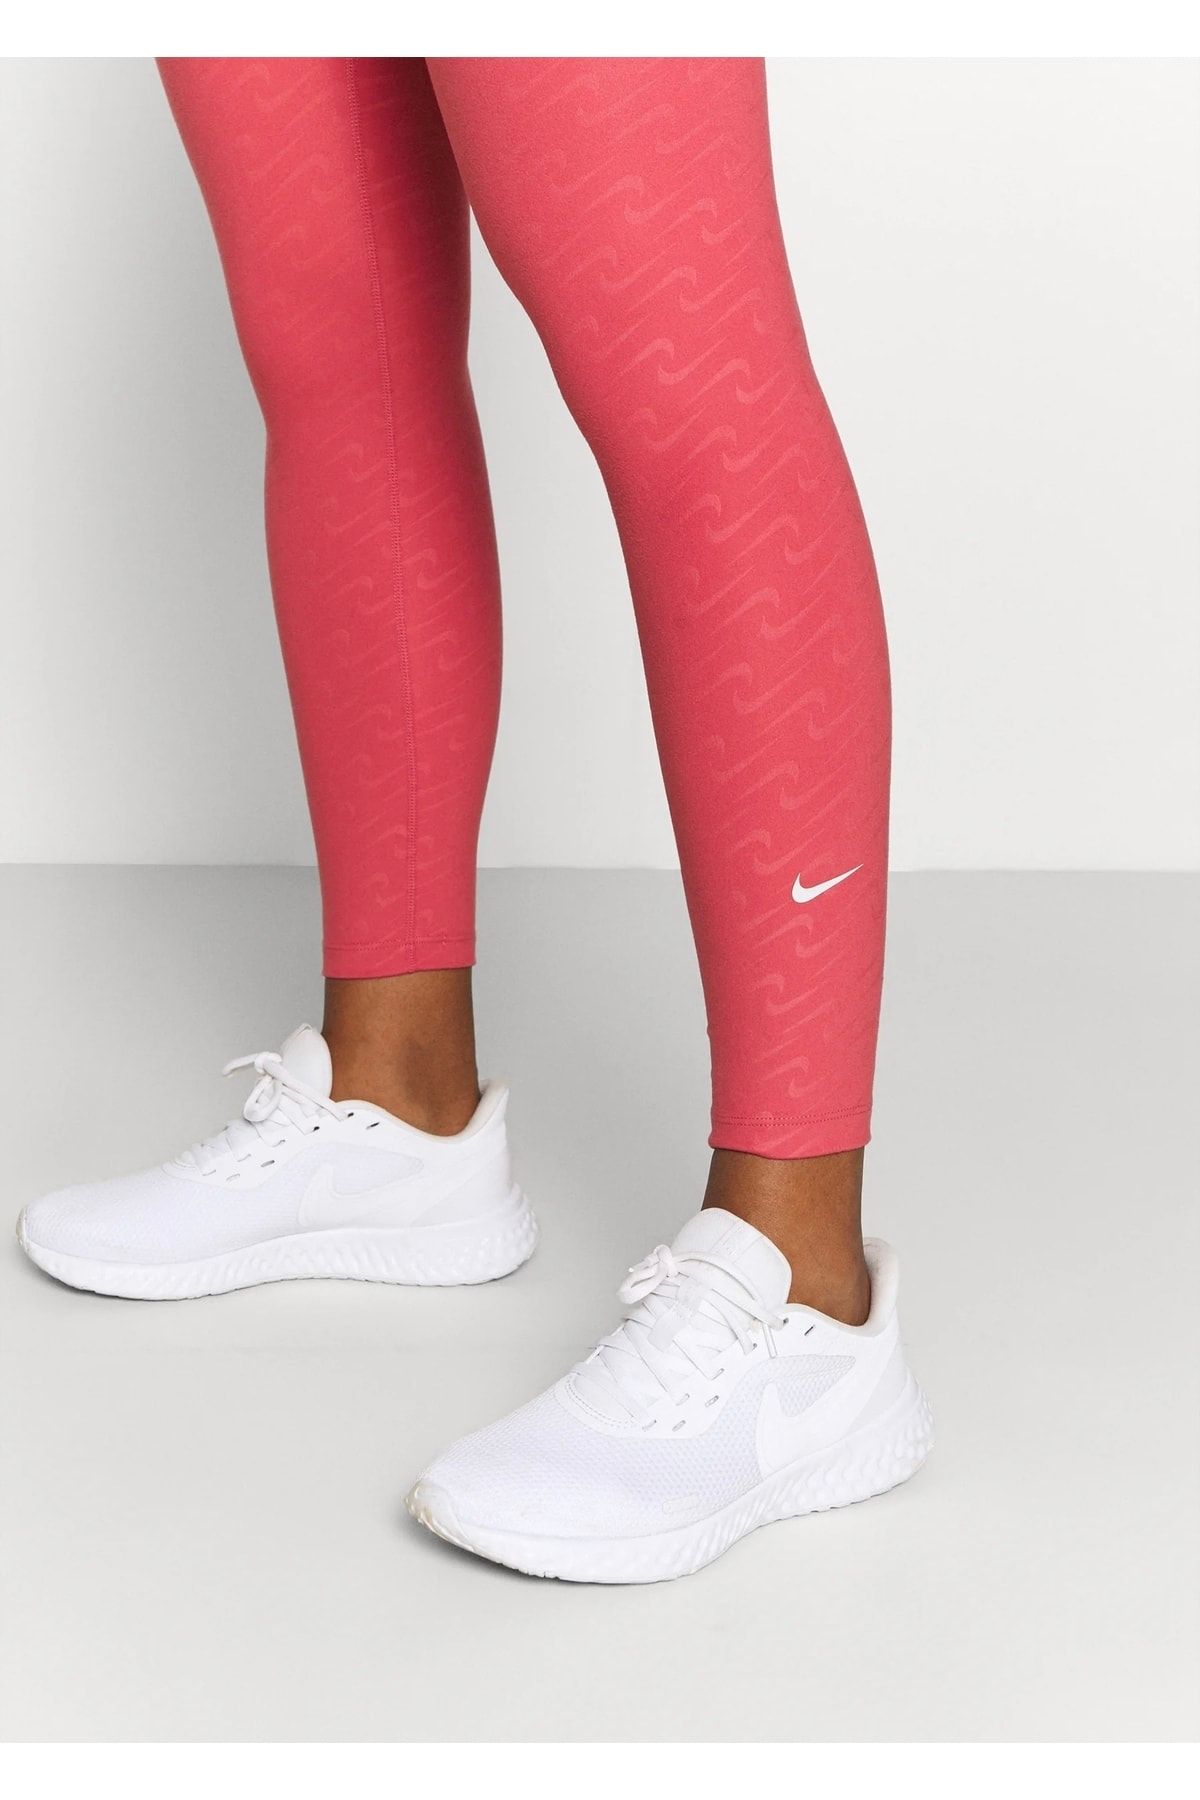 Nike Women's One Dri-Fit Icon Tight